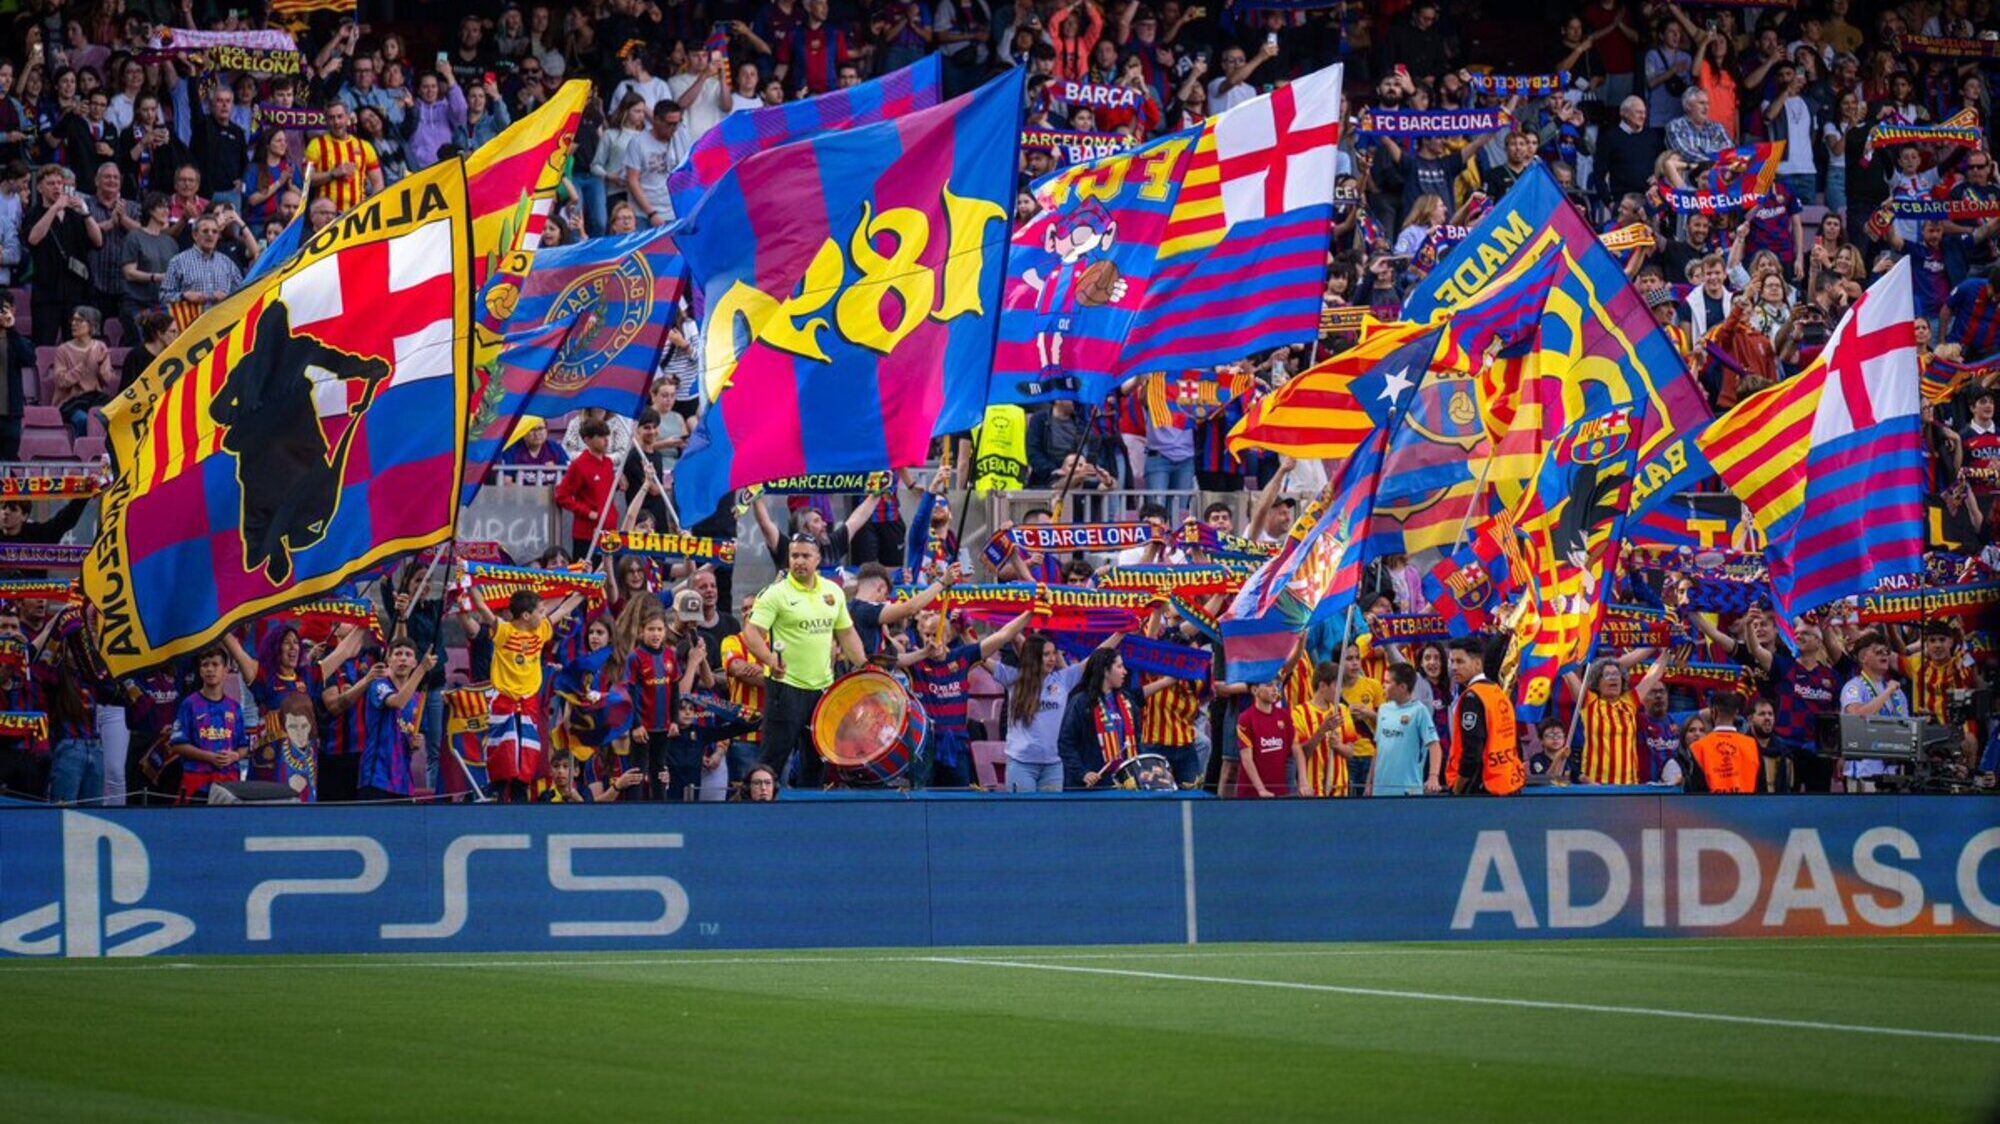 Barcelona - suma 1,2 millones en entradas